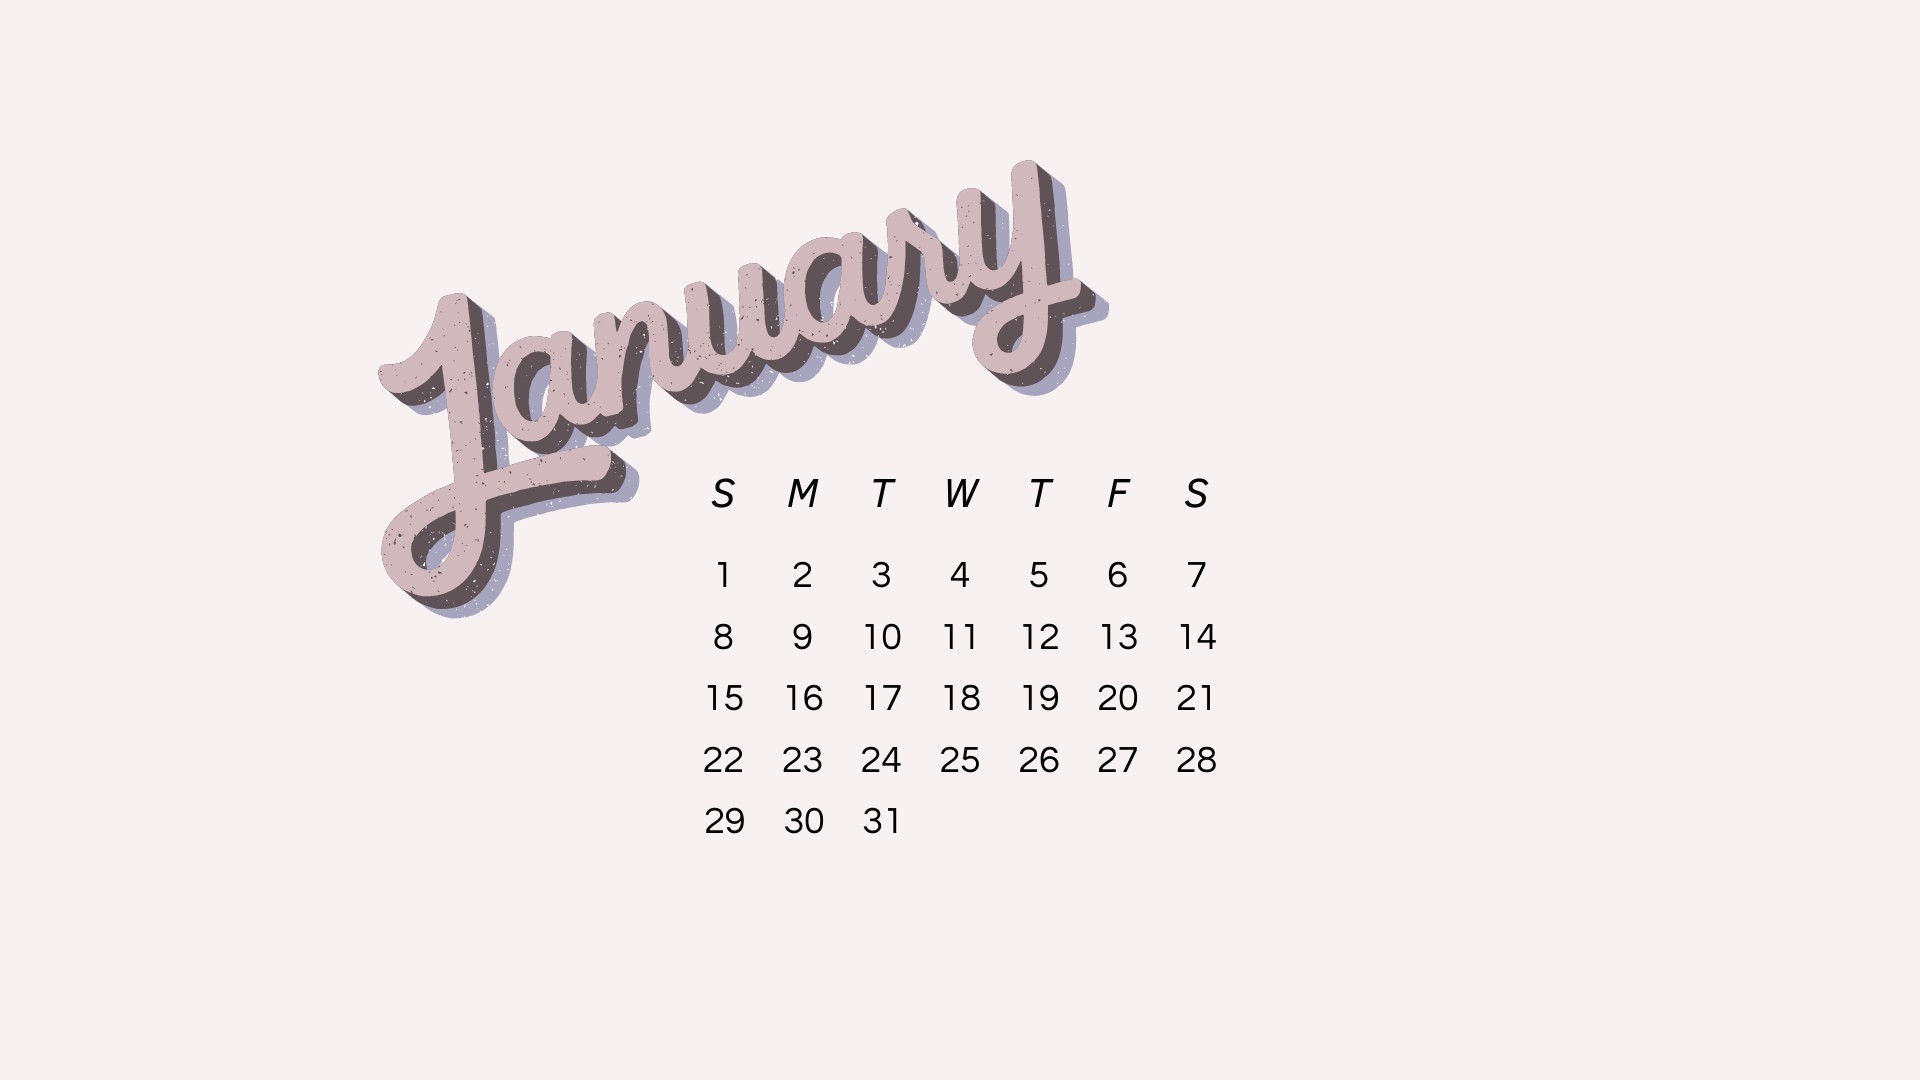 January 2021 calendar wallpapers  30 FREE designs to choose from   Calendar wallpaper Desktop wallpaper calendar 2021 calendar